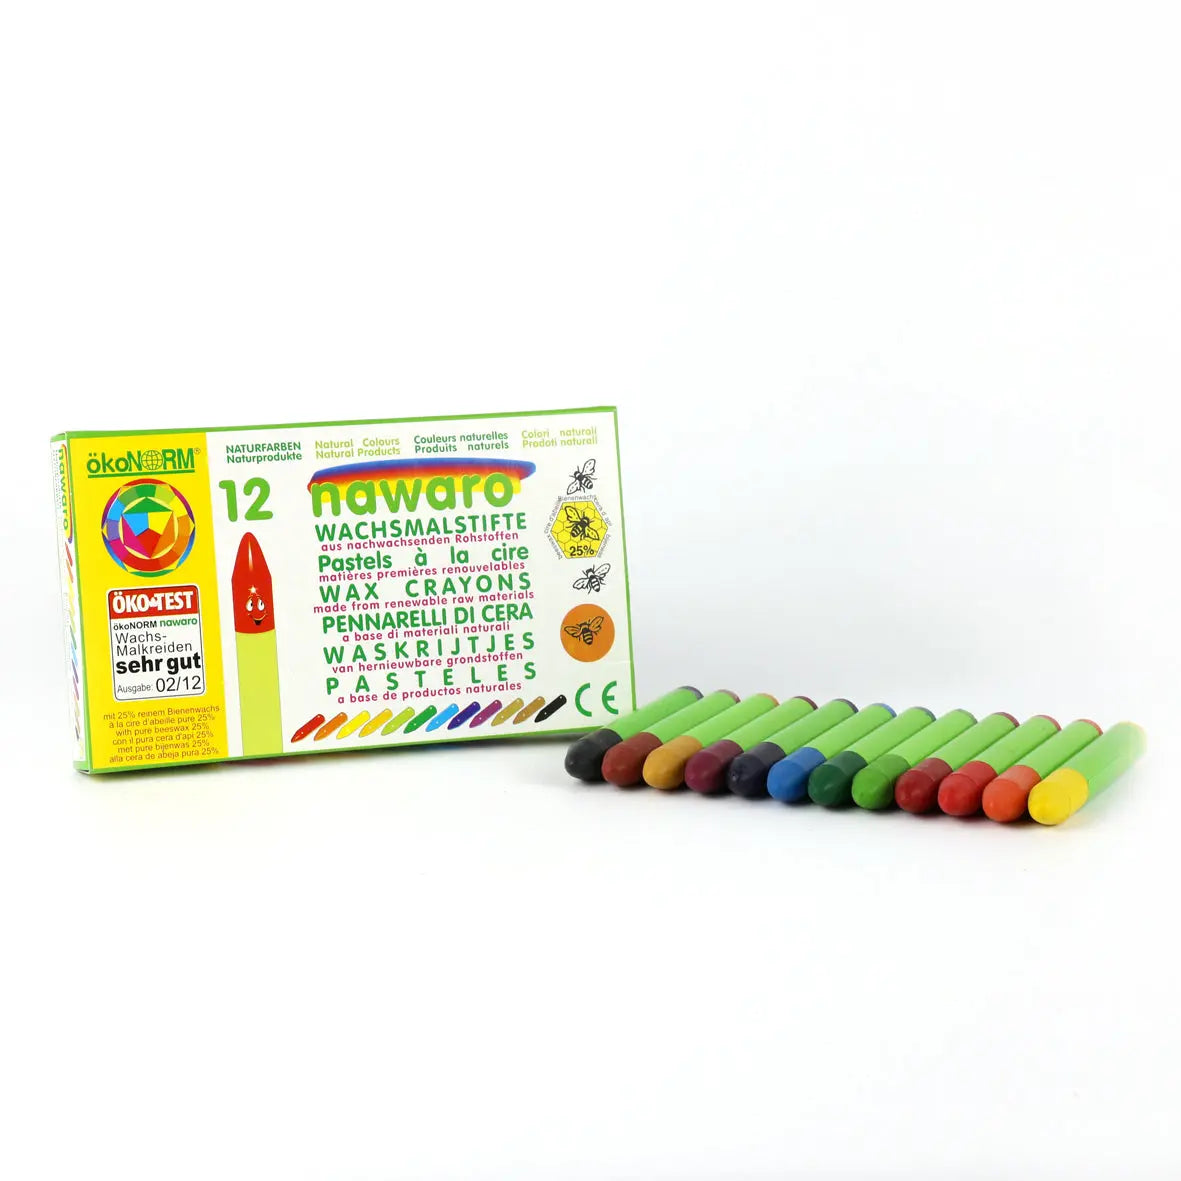 Beeswax crayons